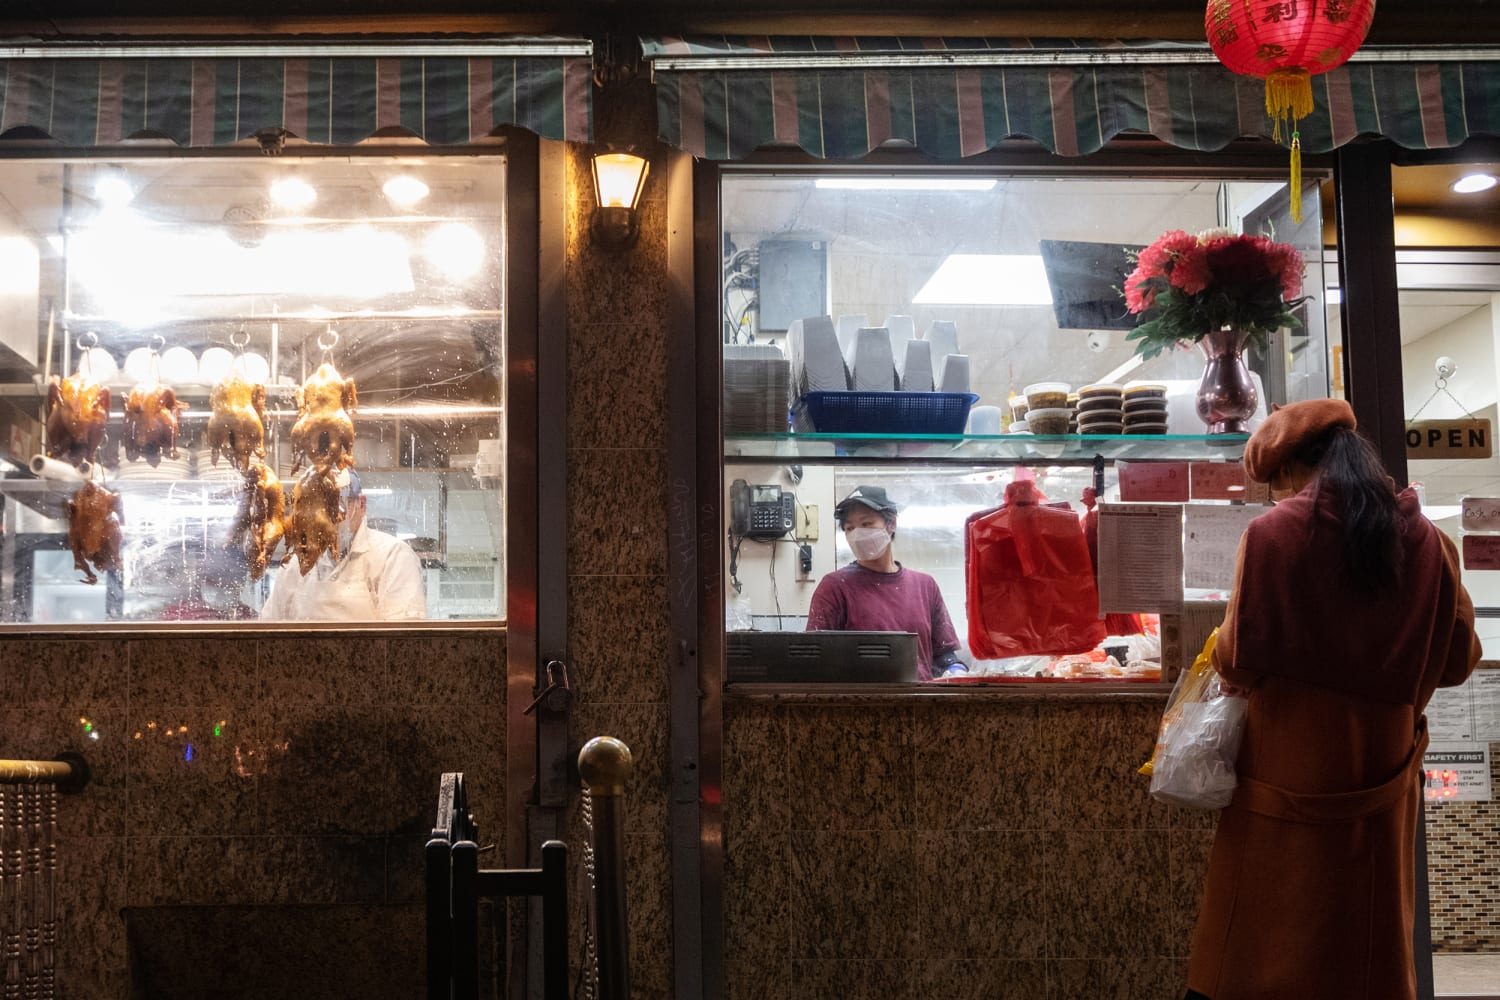 Pandemic-era stigma cost Asian restaurants $7.4B in lost revenue, new study finds